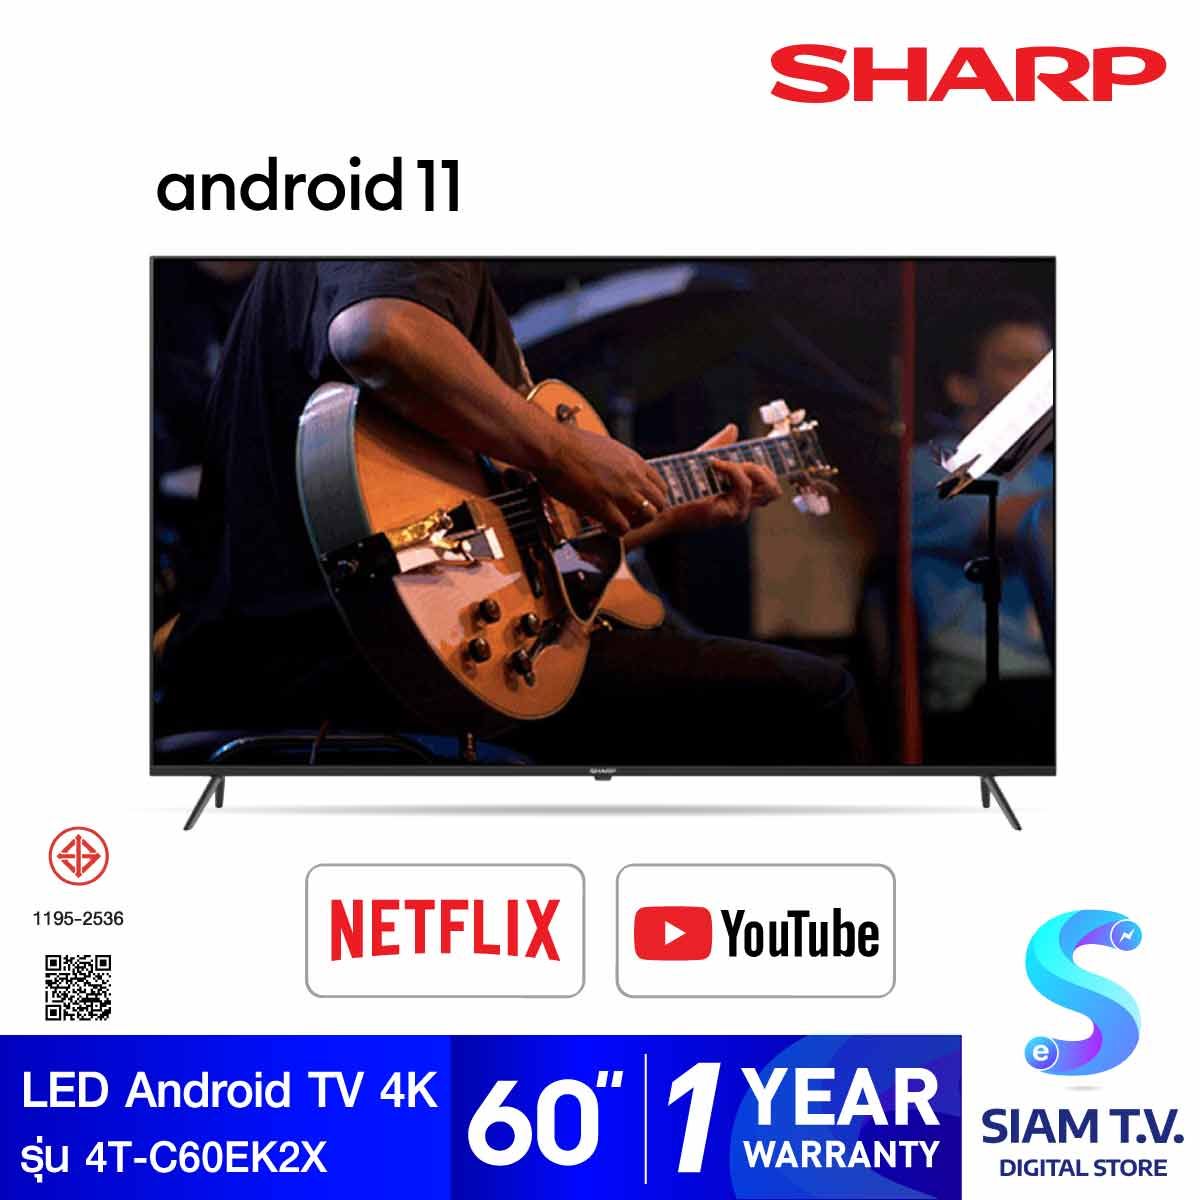 SHARP AQUOS LED Android TV 4K รุ่น 4T-C60EK2X  สมาร์ททีวี 60 นิ้ว Android 11 ปี2023